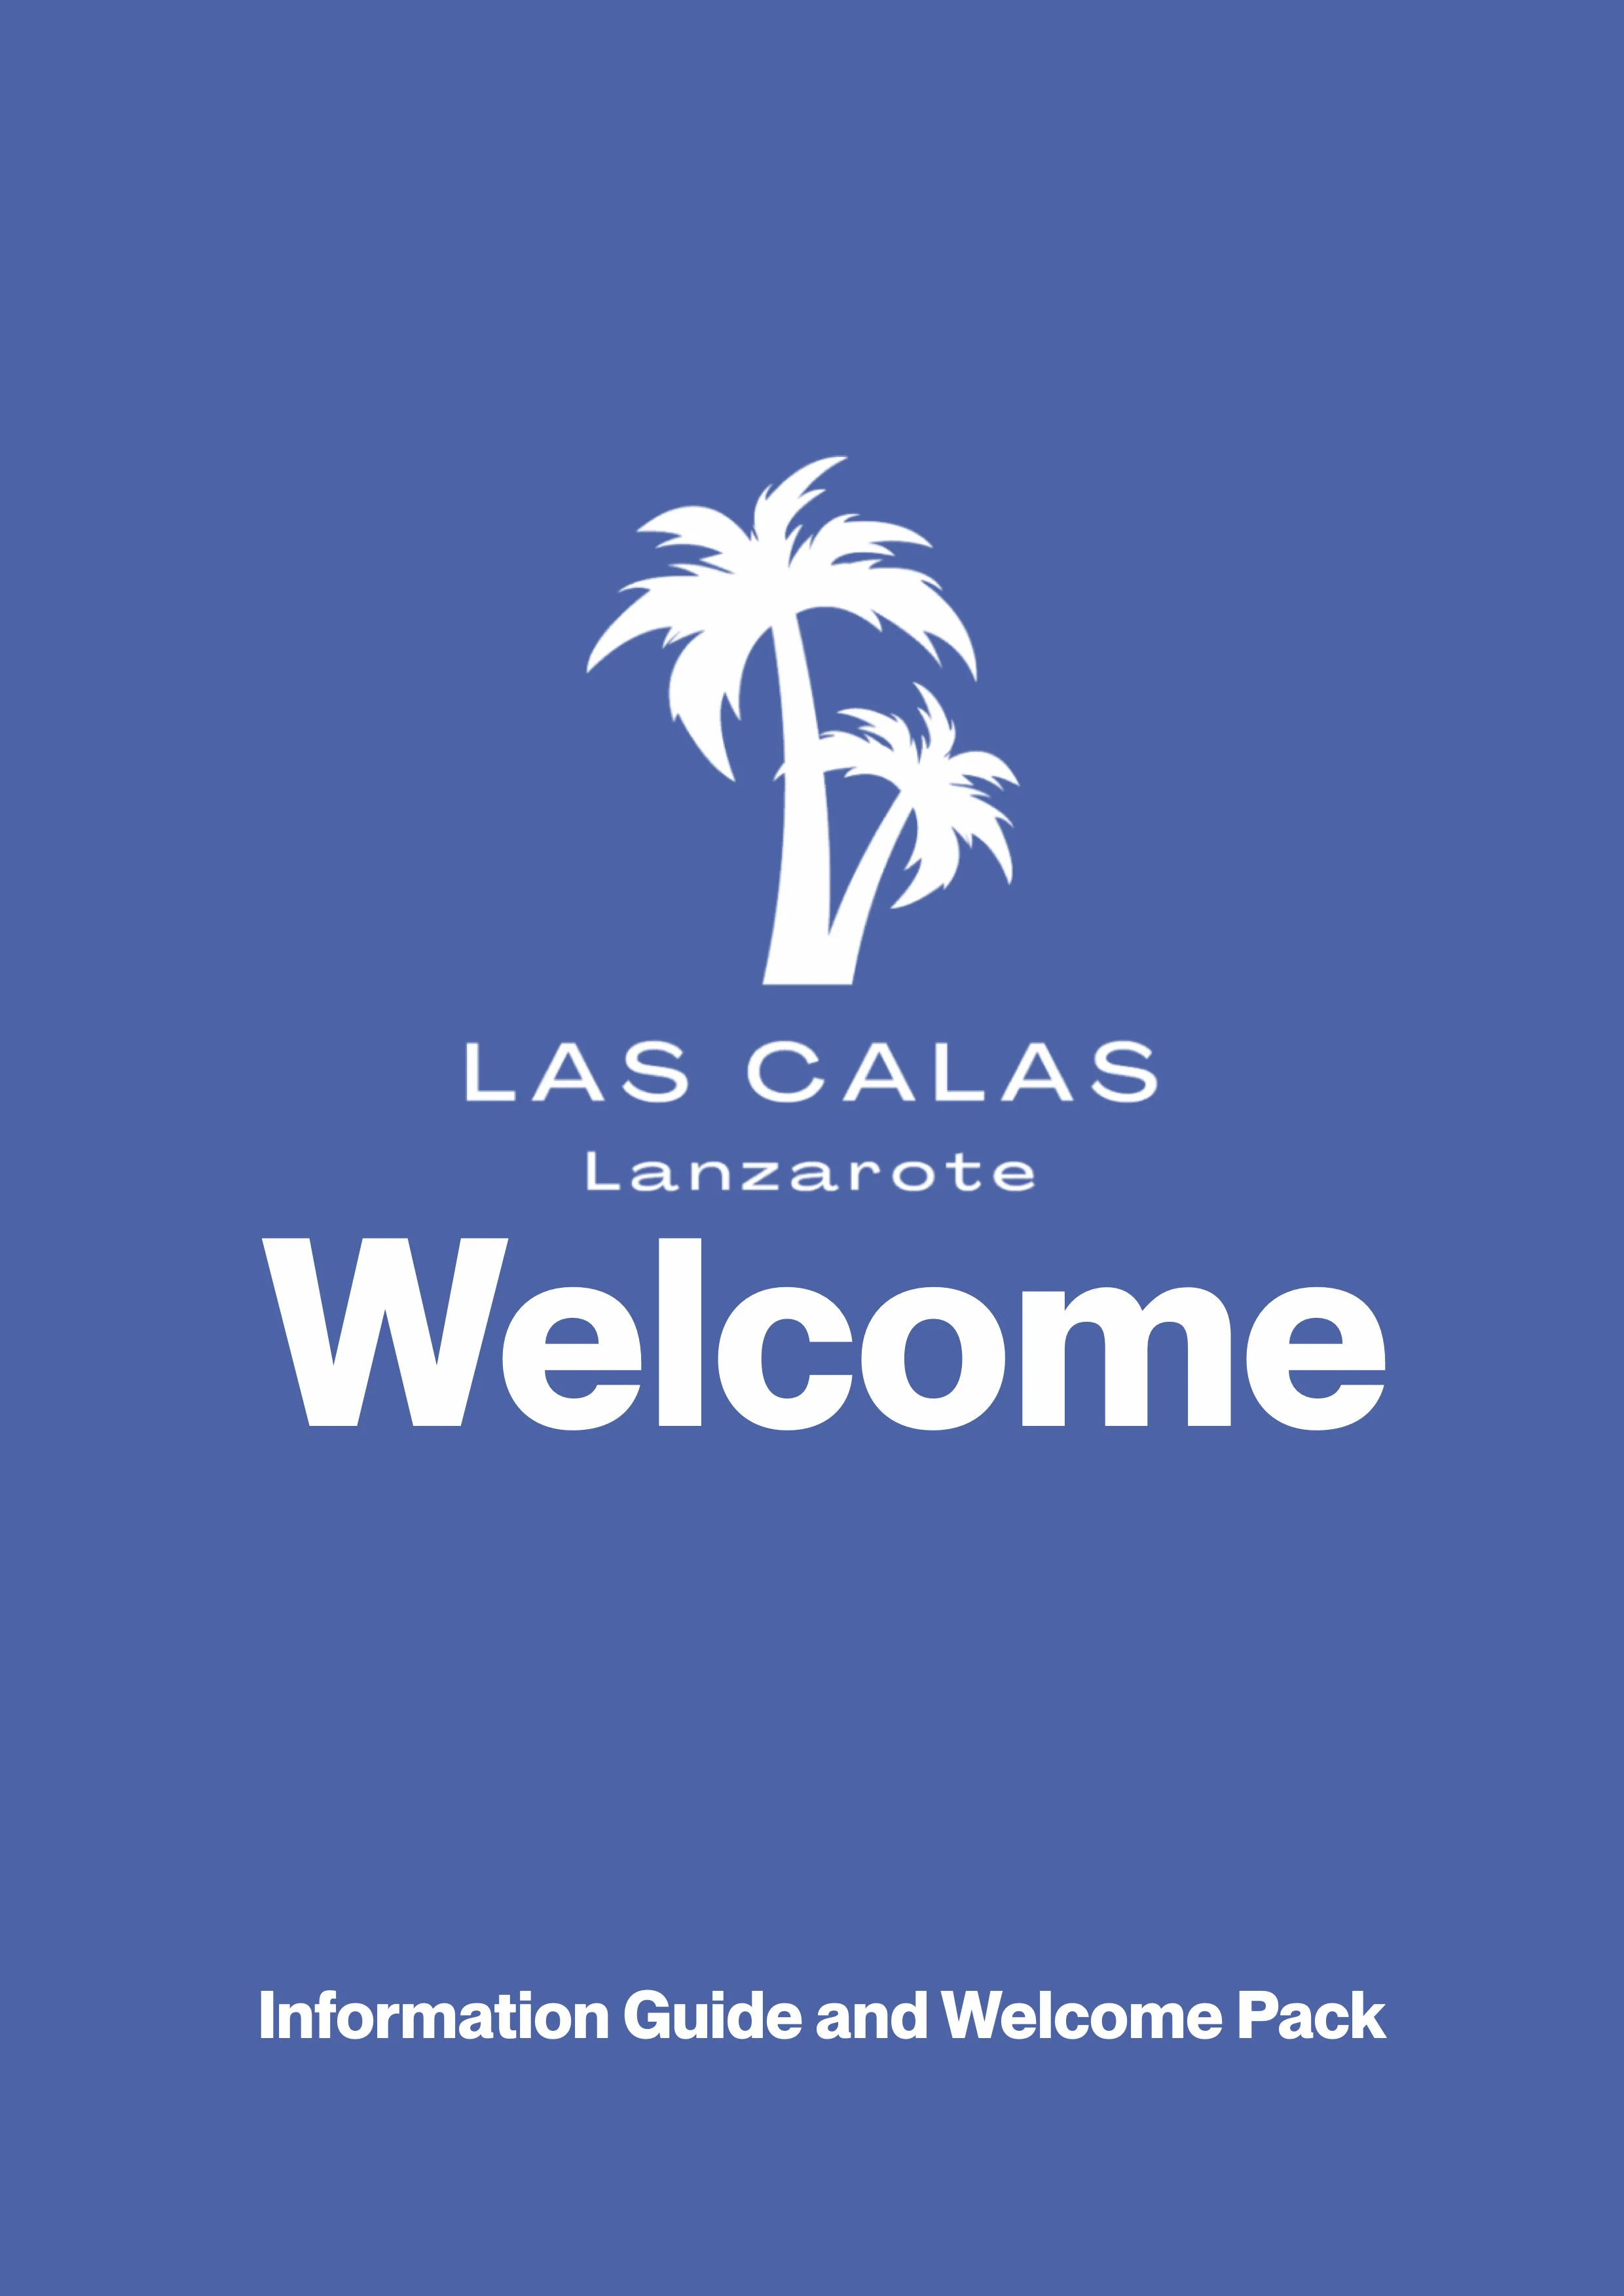 Welcome to Club Las Calas